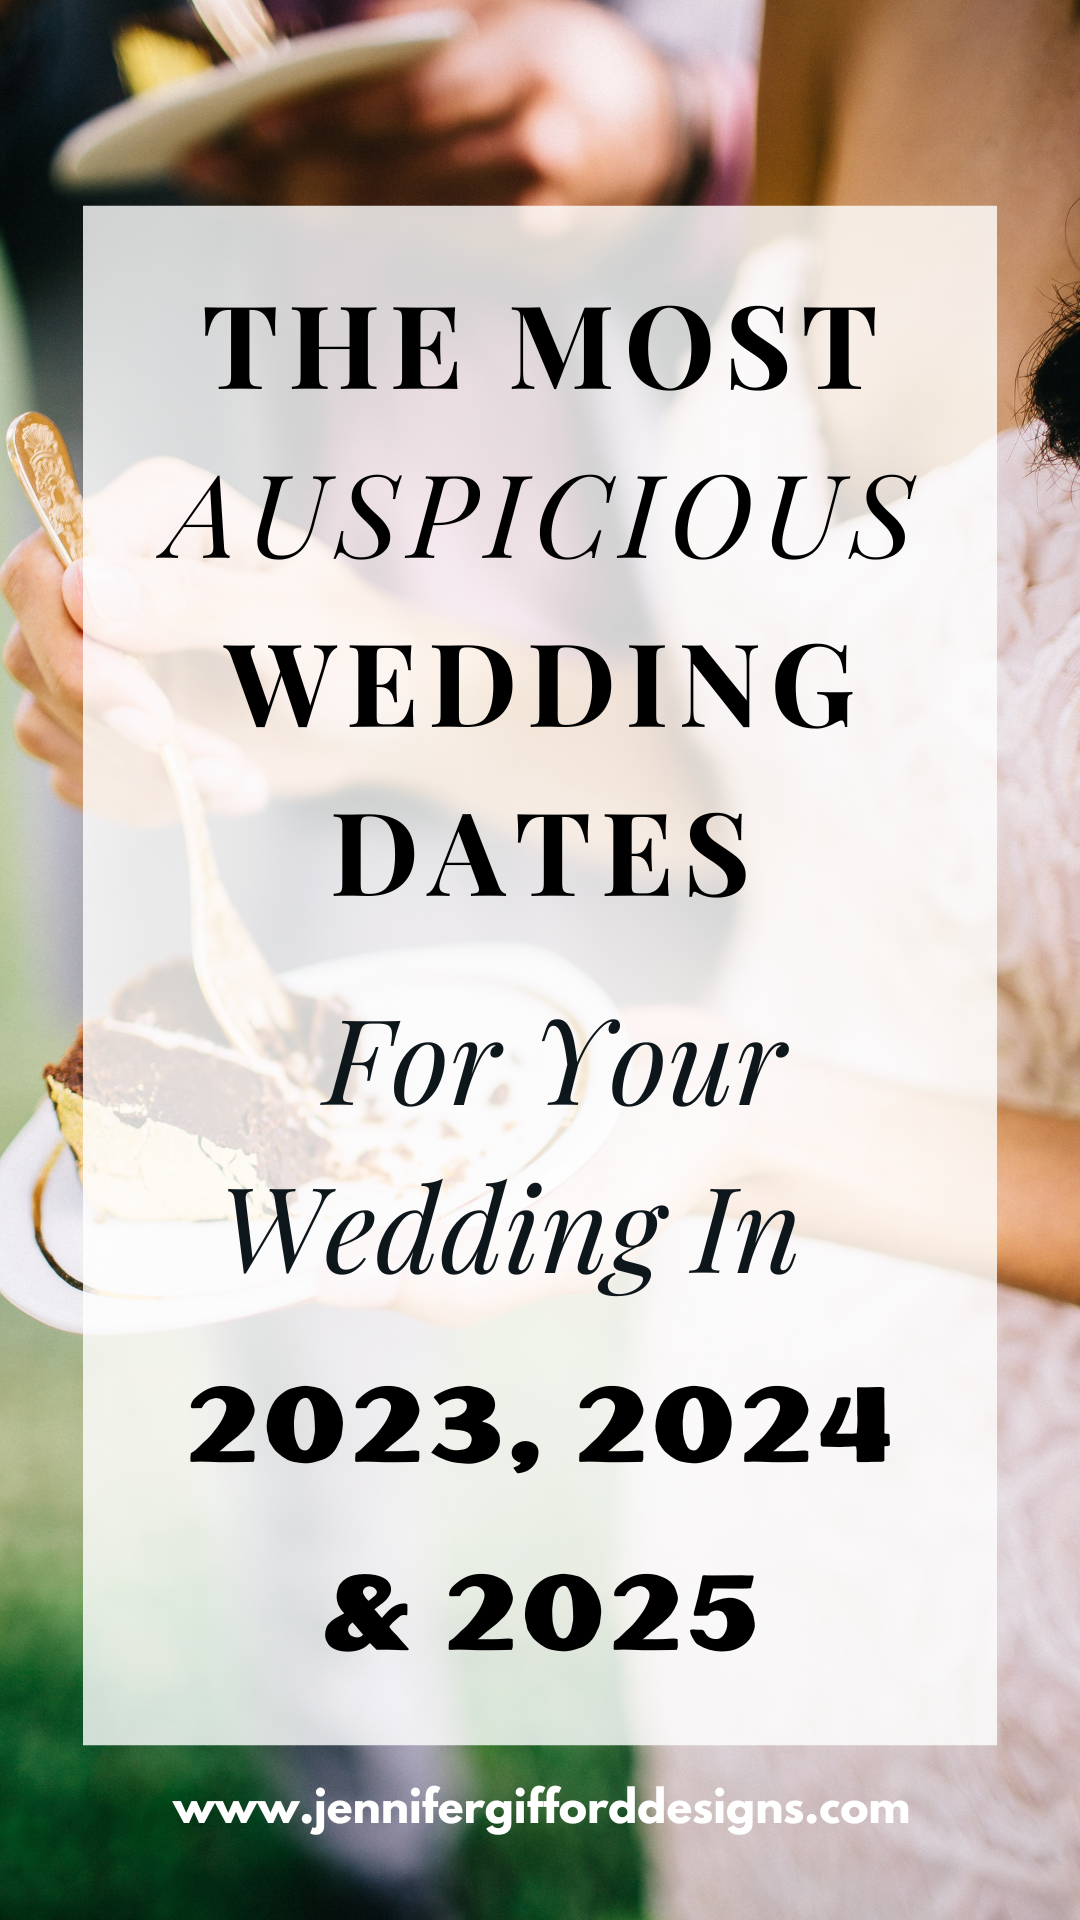 https://images.squarespace-cdn.com/content/v1/5909e0af893fc0051bb1b9c1/455fcc04-e406-460f-8839-78005526fe36/Pinterest+Auspicious+Wedding+dates.png